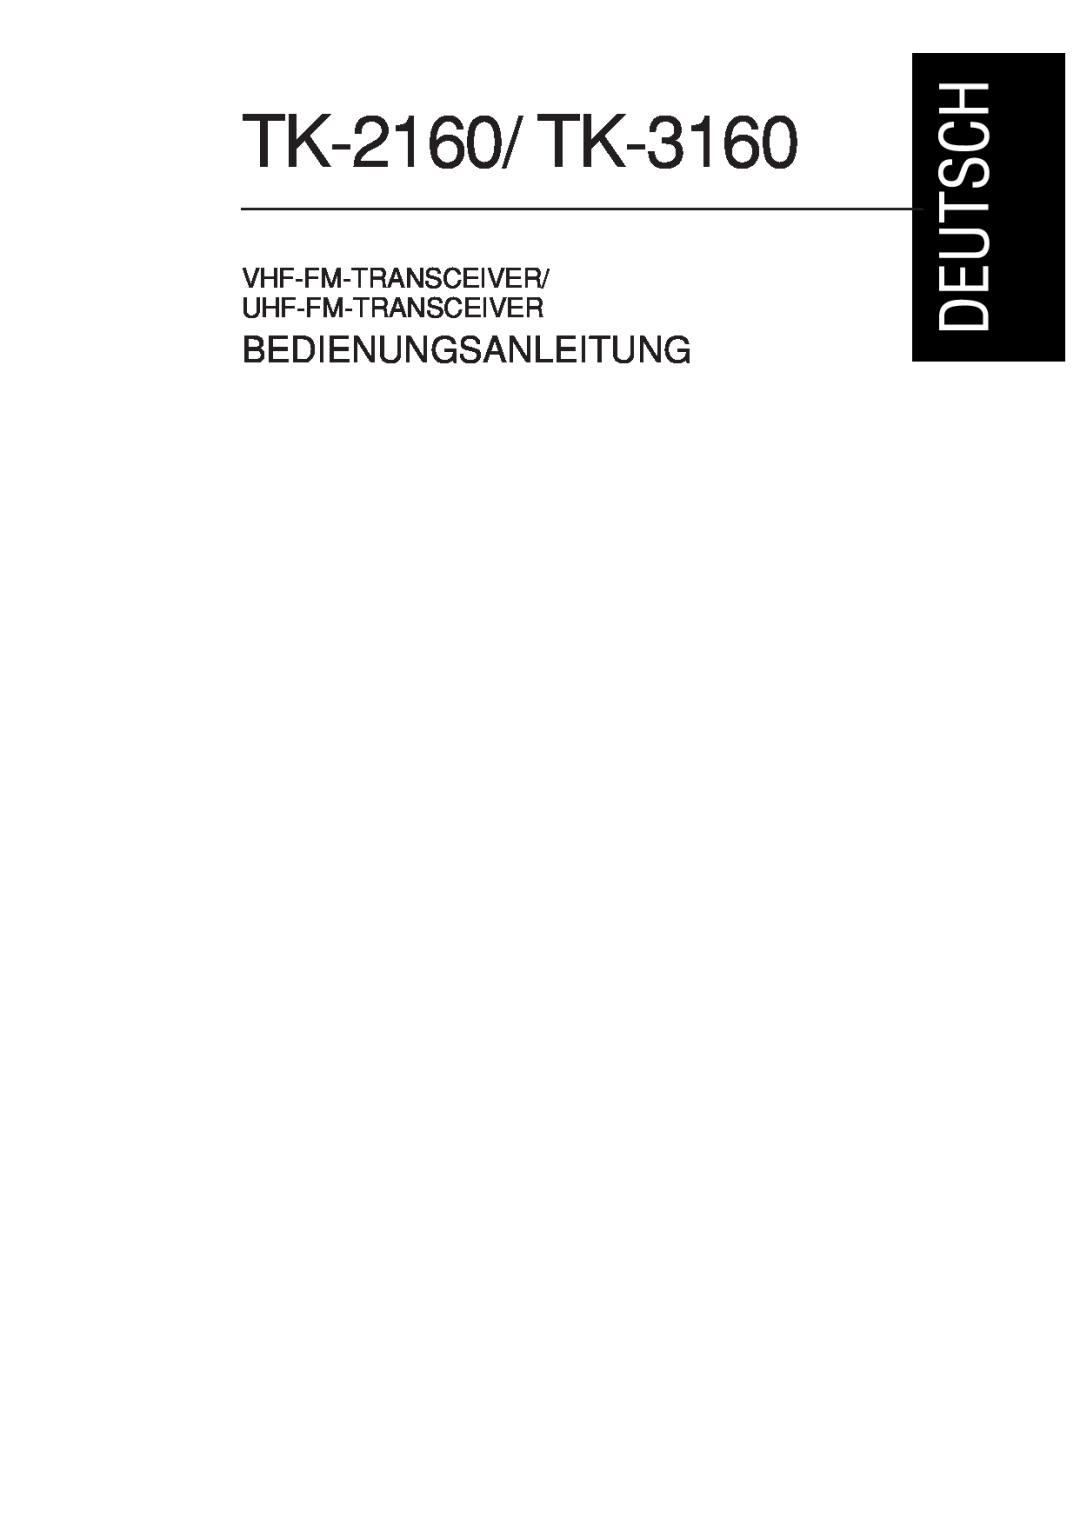 Kenwood instruction manual TK-2160/ TK-3160, Bedienungsanleitung, Vhf-Fm-Transceiver Uhf-Fm-Transceiver 